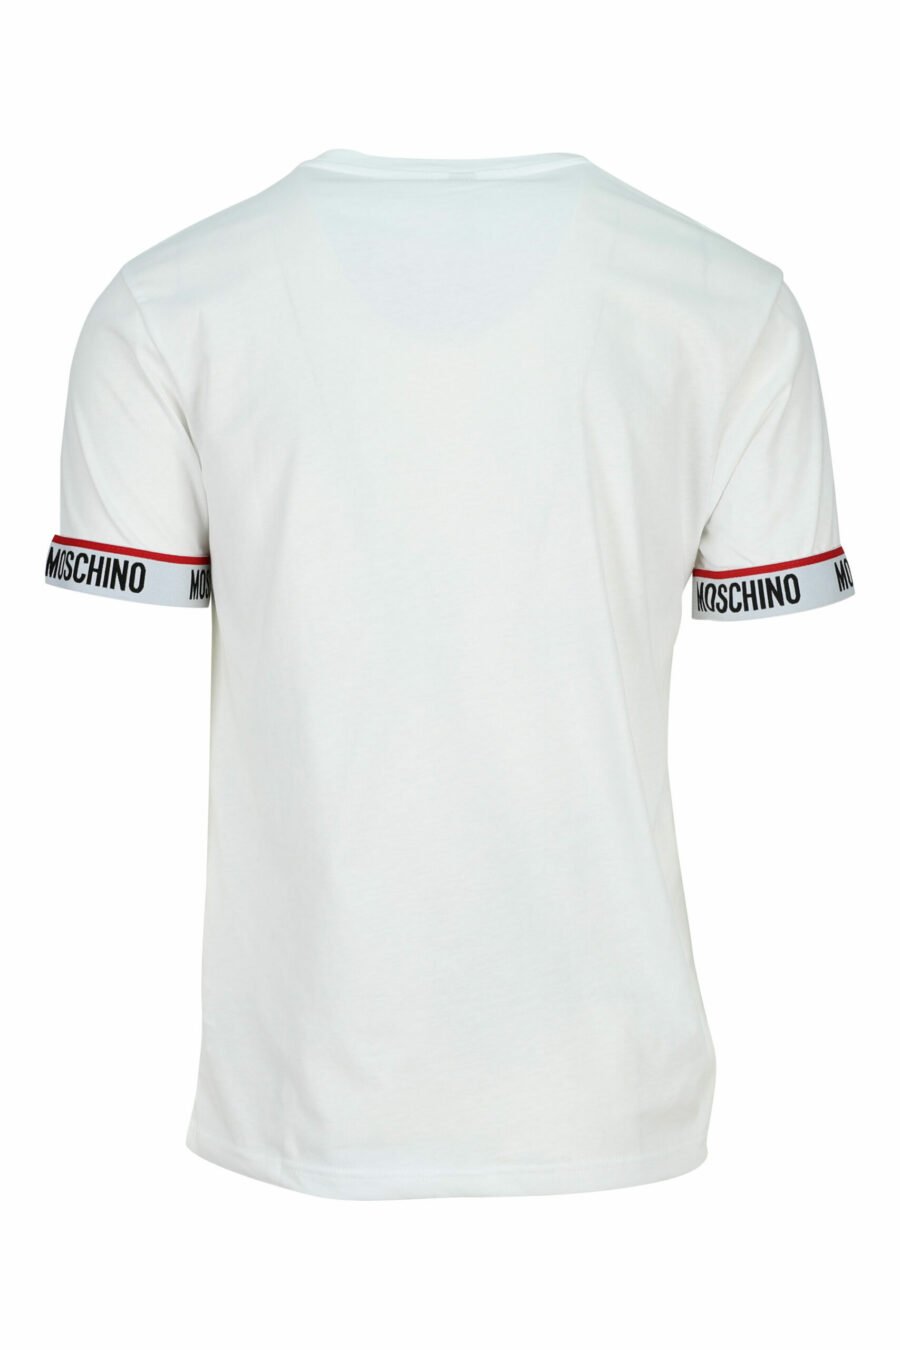 T-shirt branca com logótipo branco nas mangas - 667113604565 1 scaled